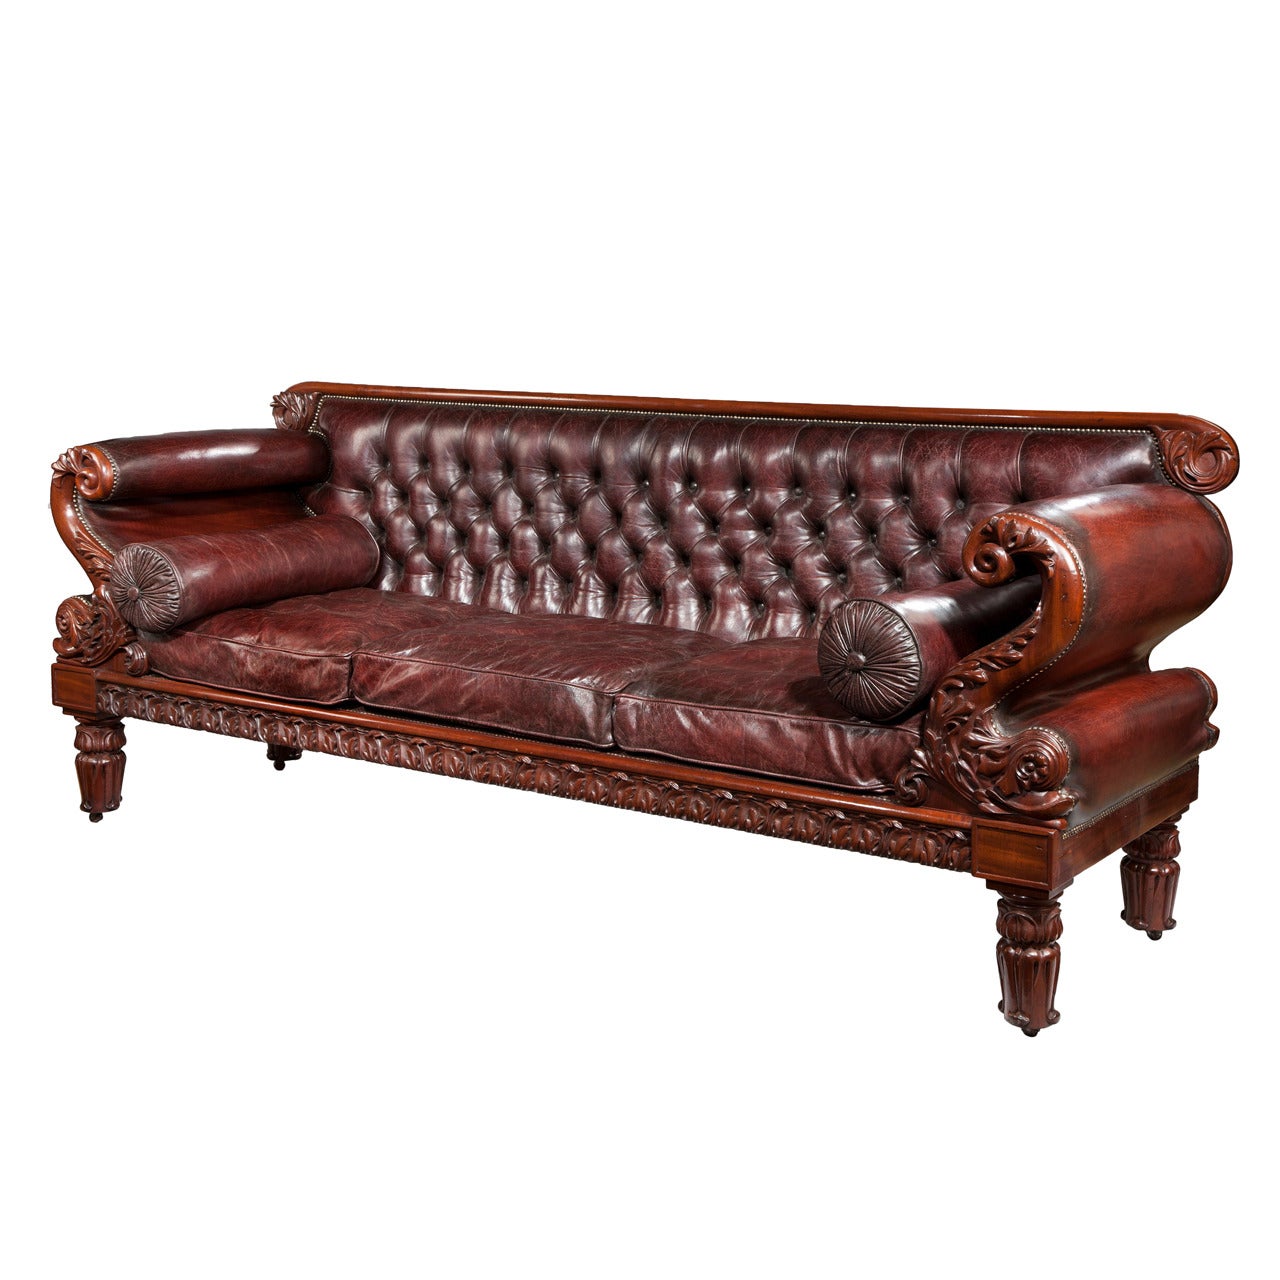 Leather regency antique sofa